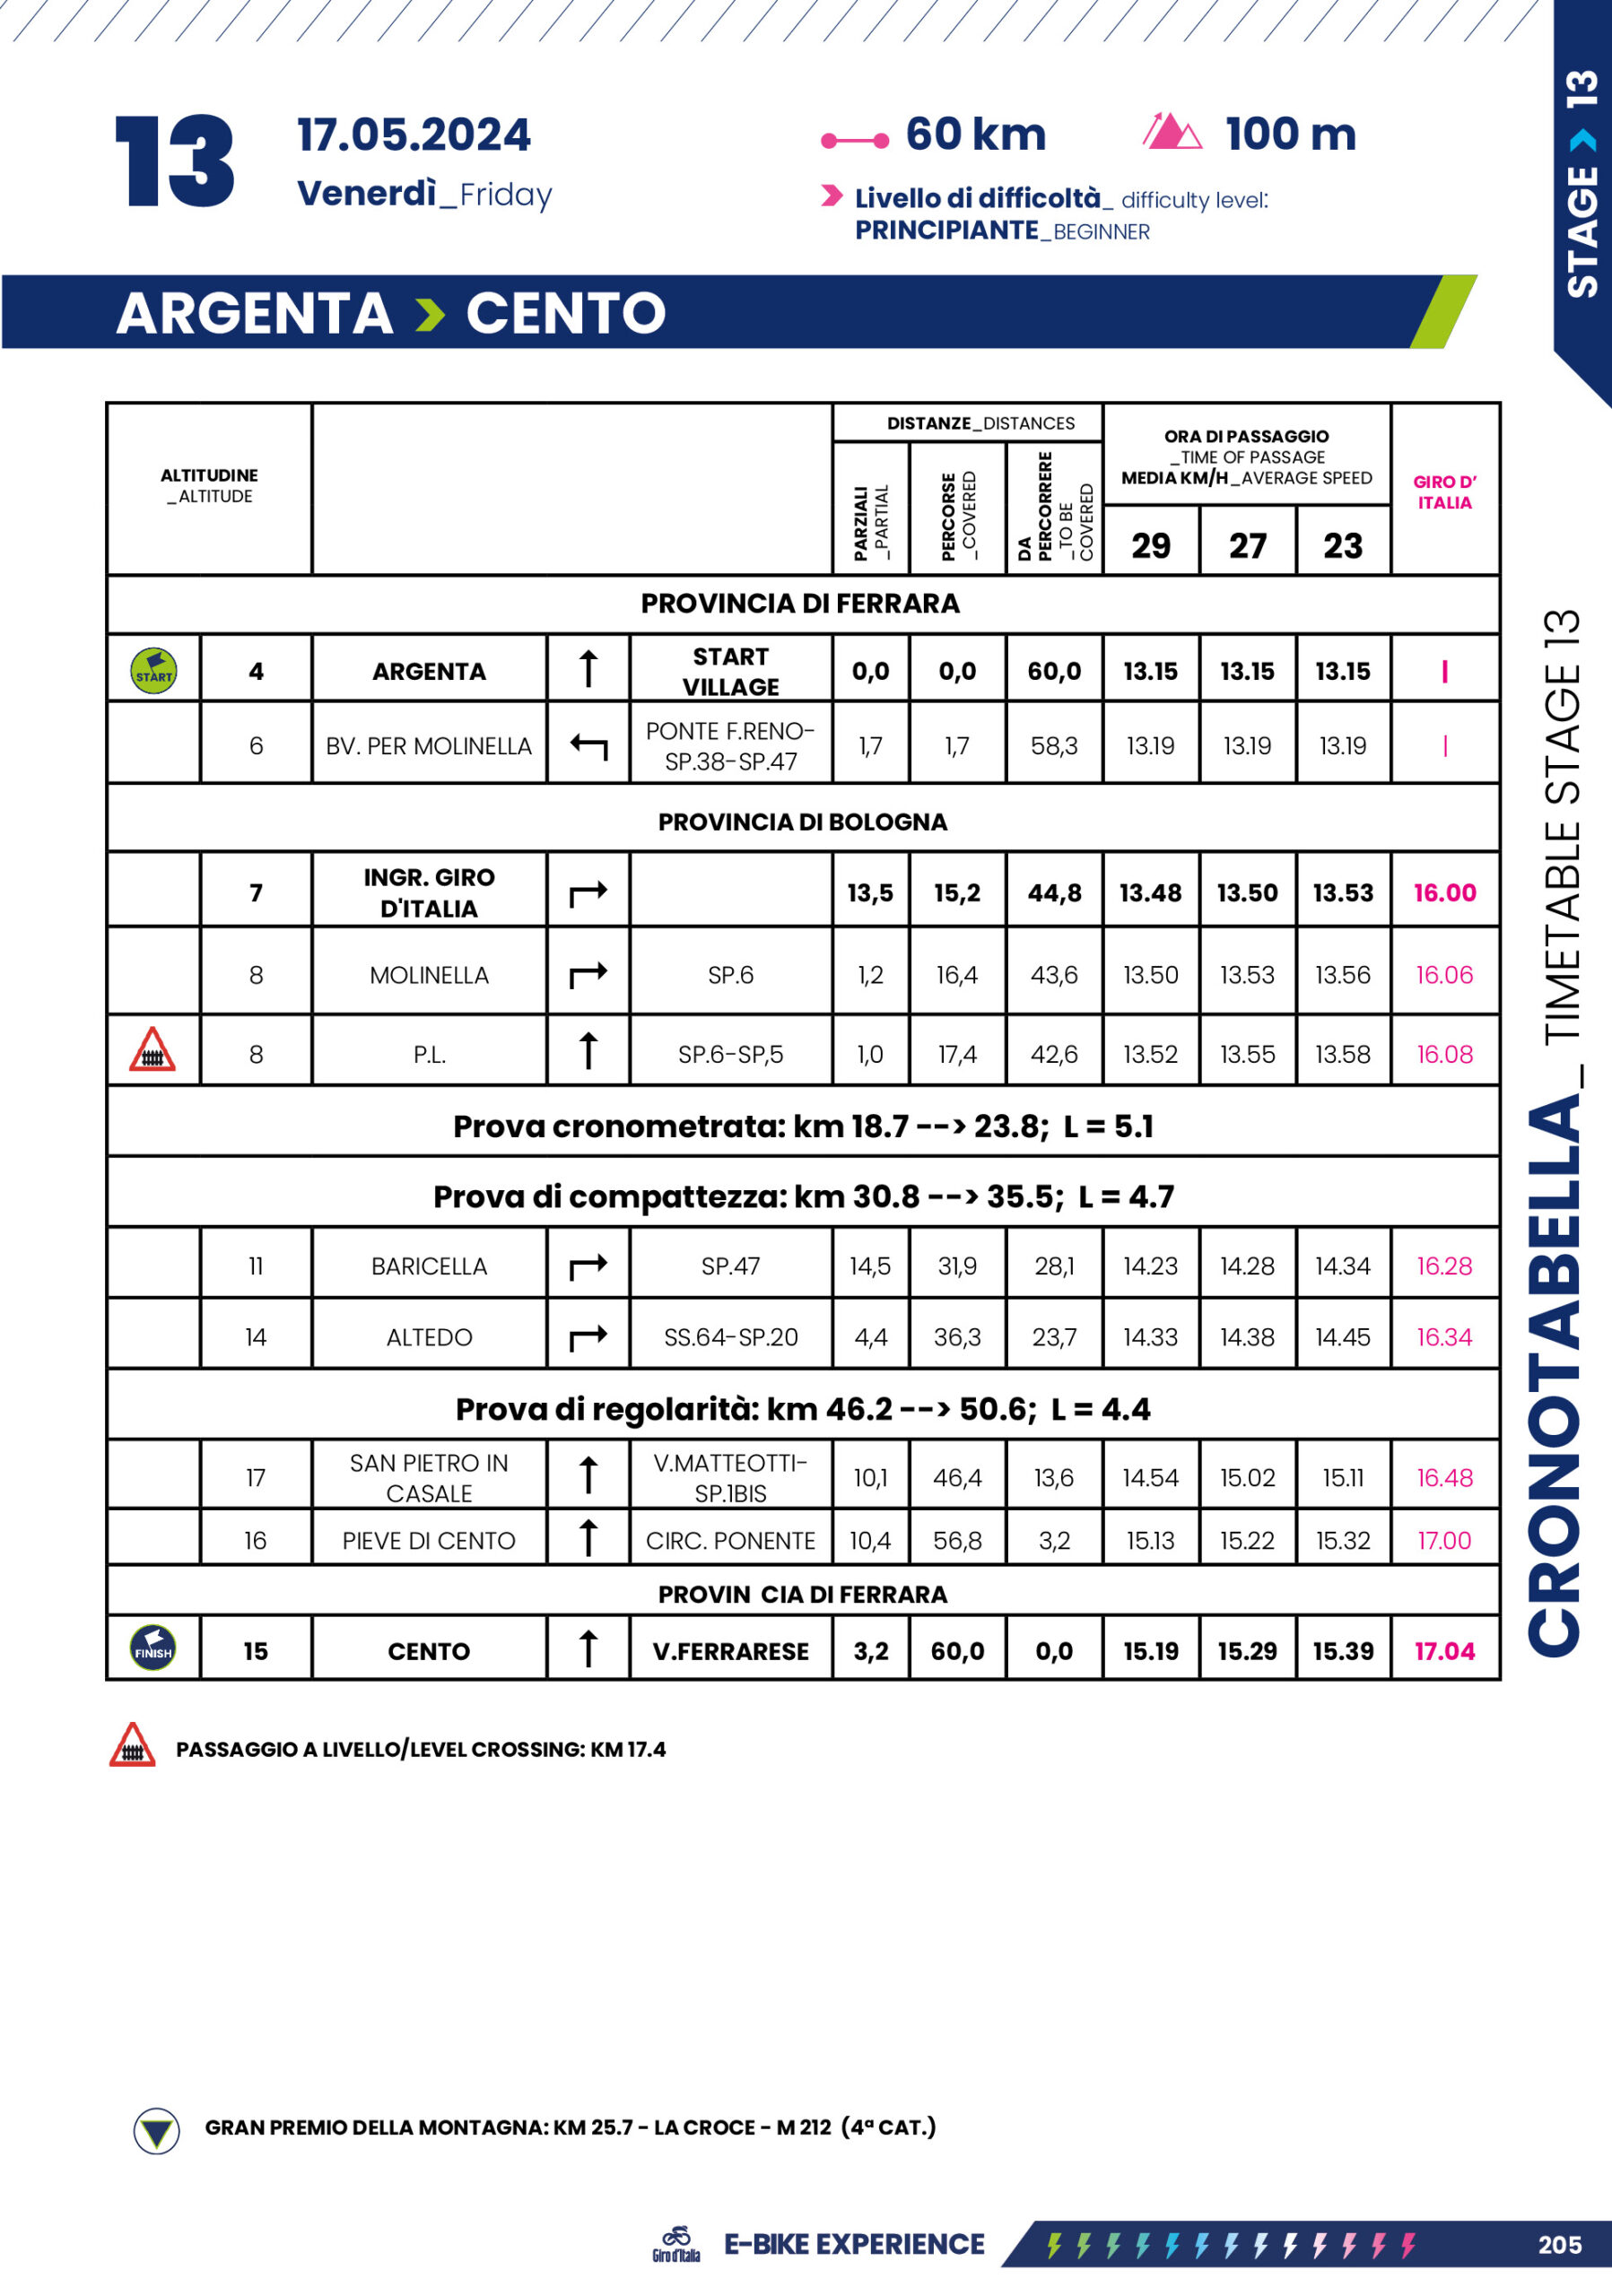 Cronotabella/Itinerary Timetable Tappa 13 Giro-E 2024